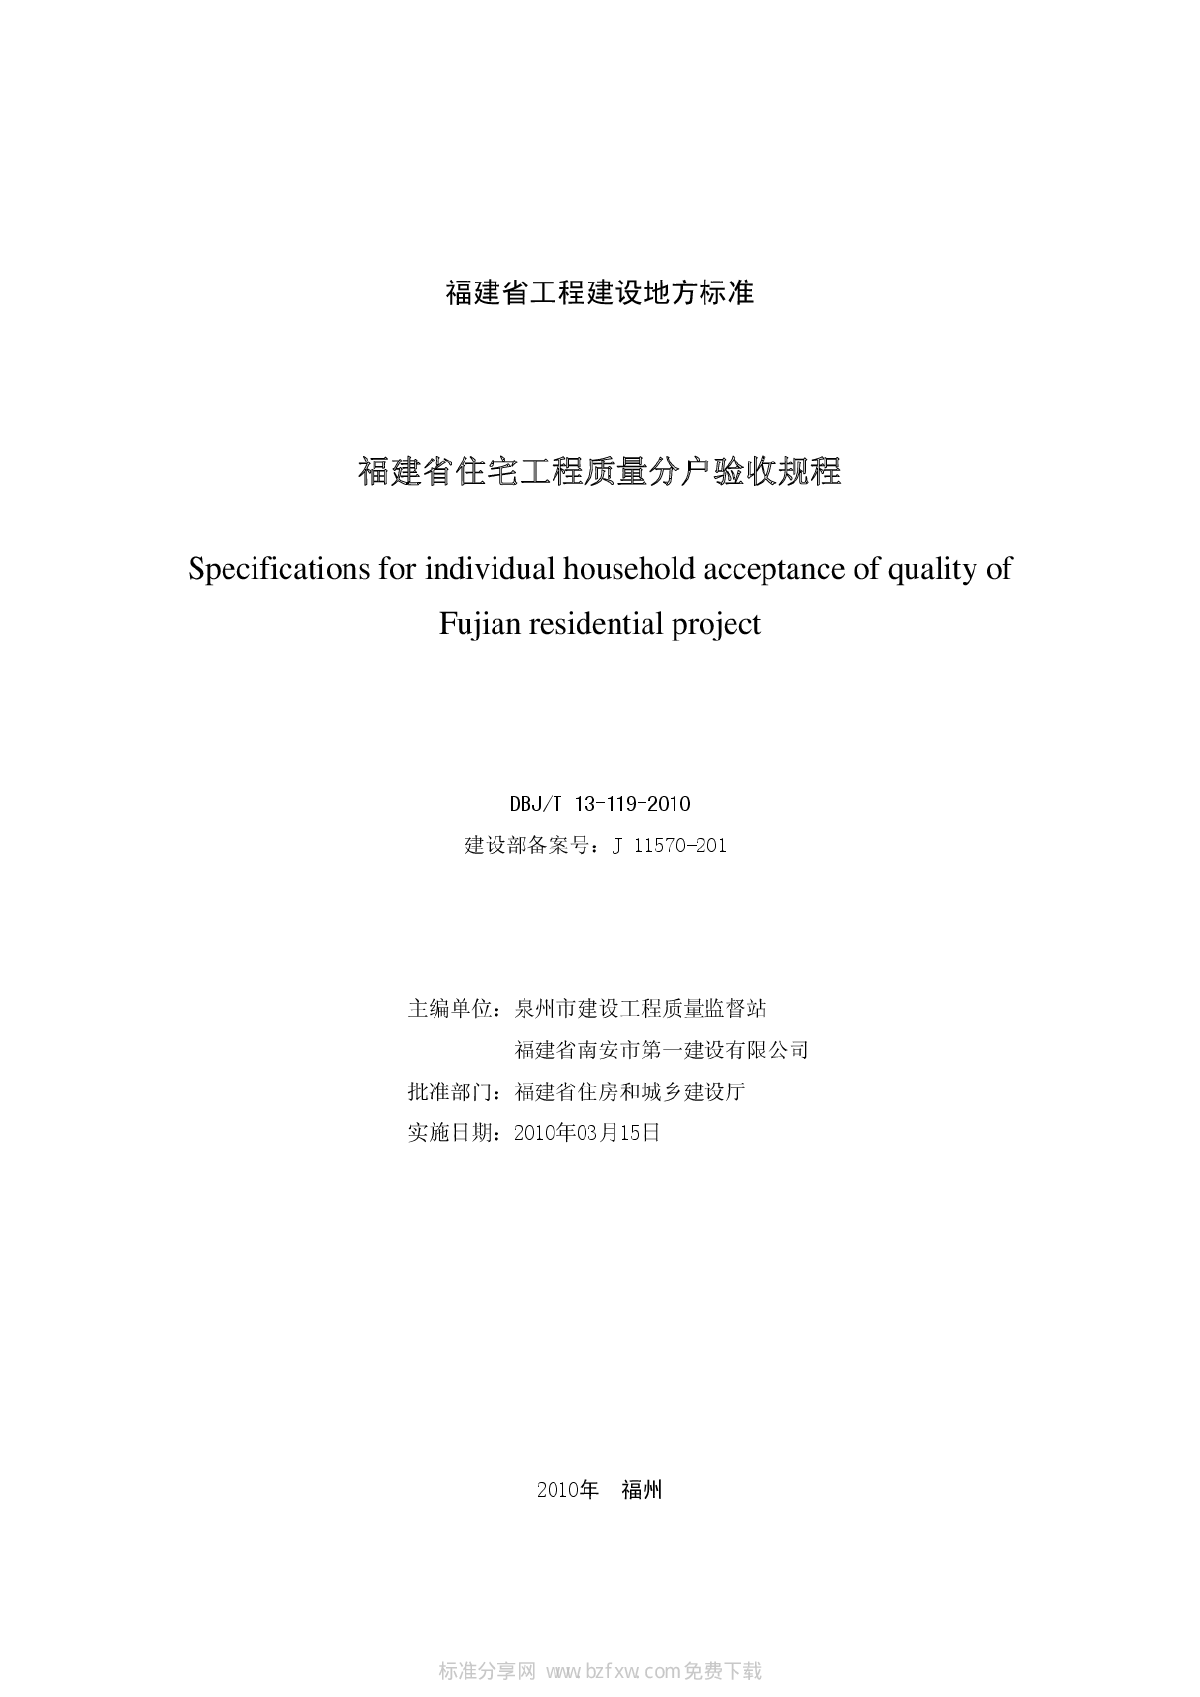 DBJT 13-119-2010 福建省住宅工程质量分户验收规程-图二